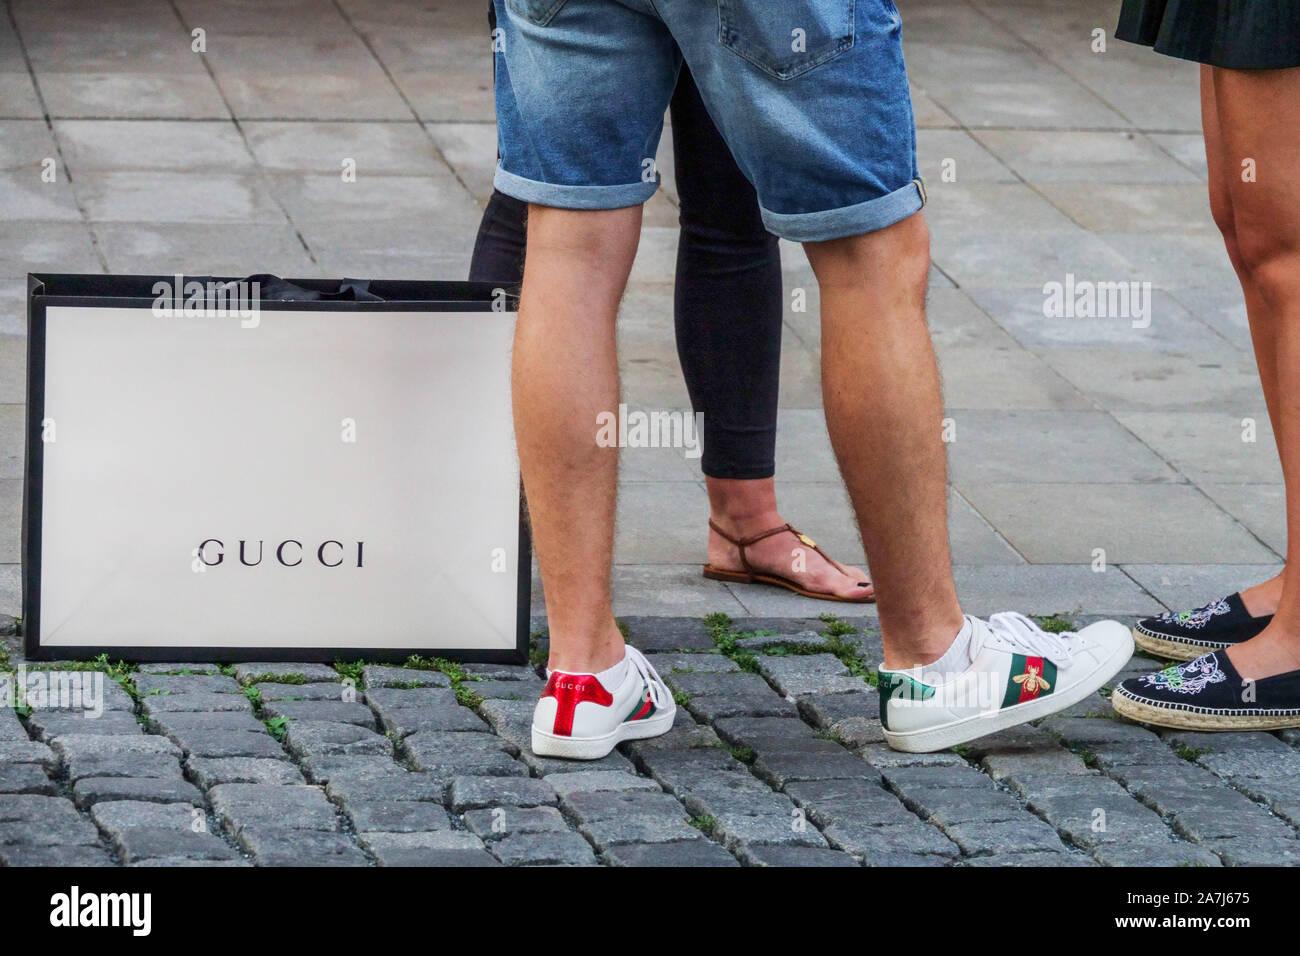 Gucci shoping bag and Gucci sneakers, Prague Czech Republic Stock Photo -  Alamy